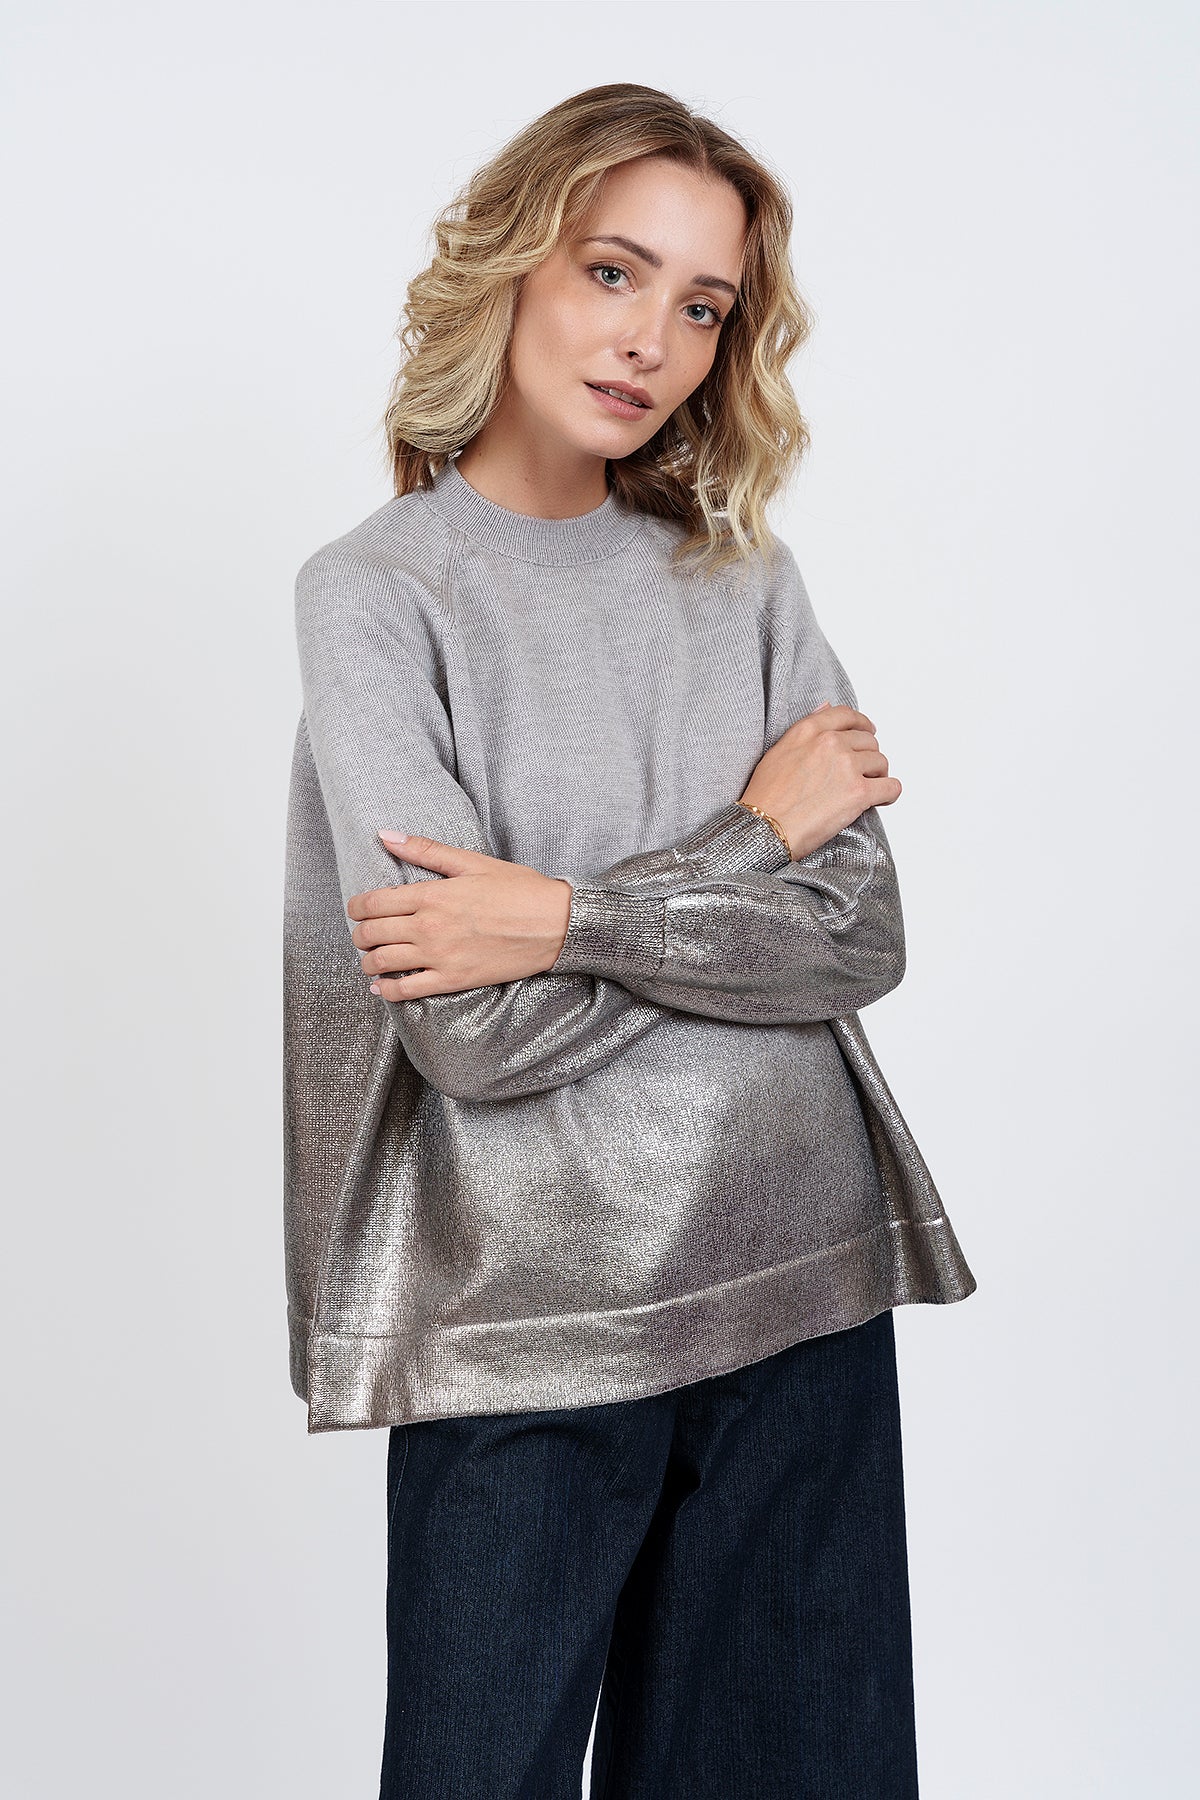 PLEAIDI gray laminated sweater